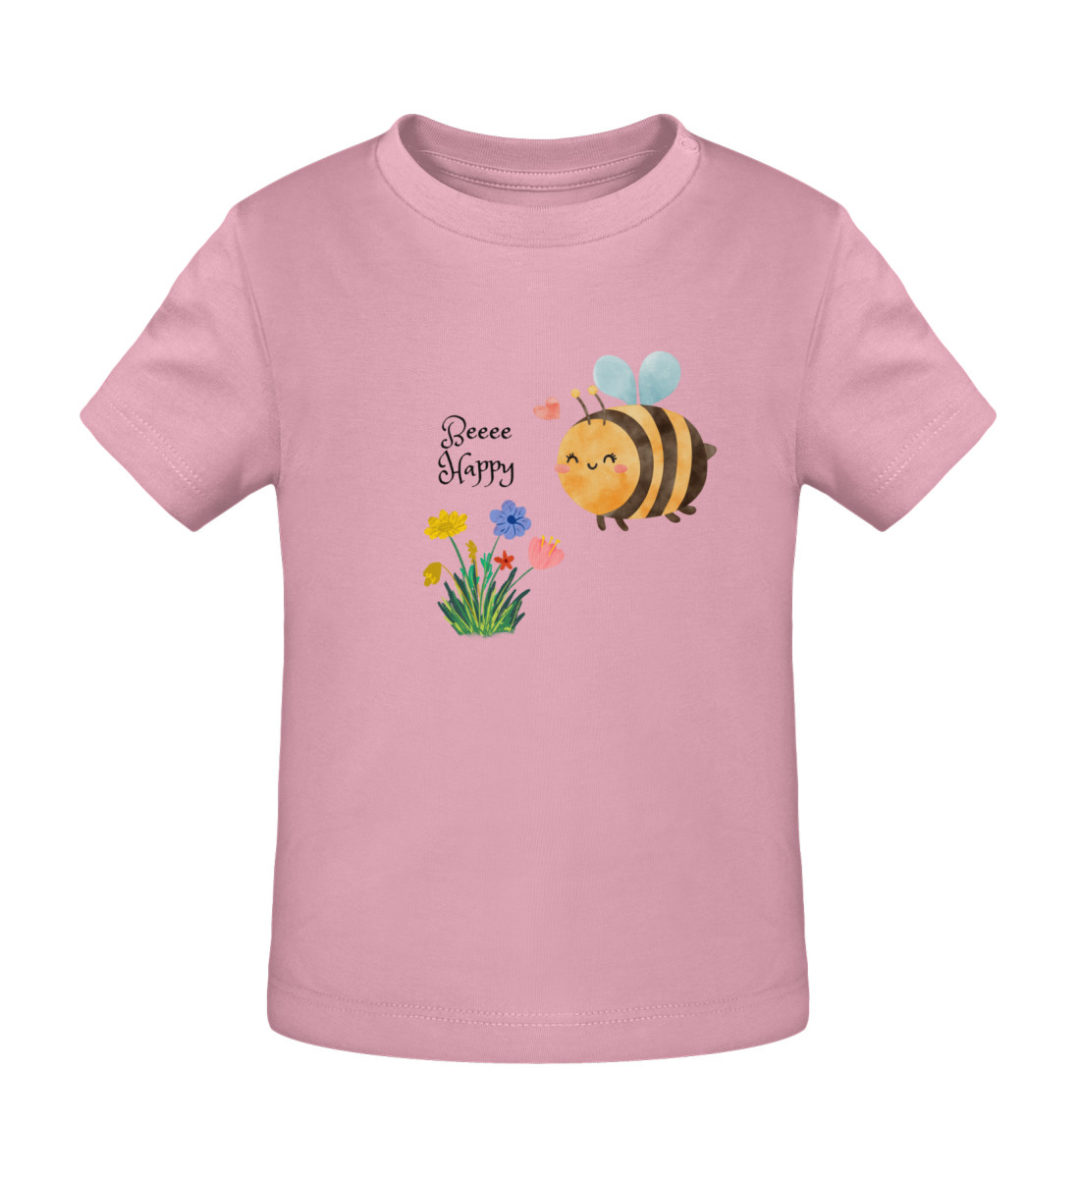 Beee happy - Baby Creator T-Shirt ST/ST-6883